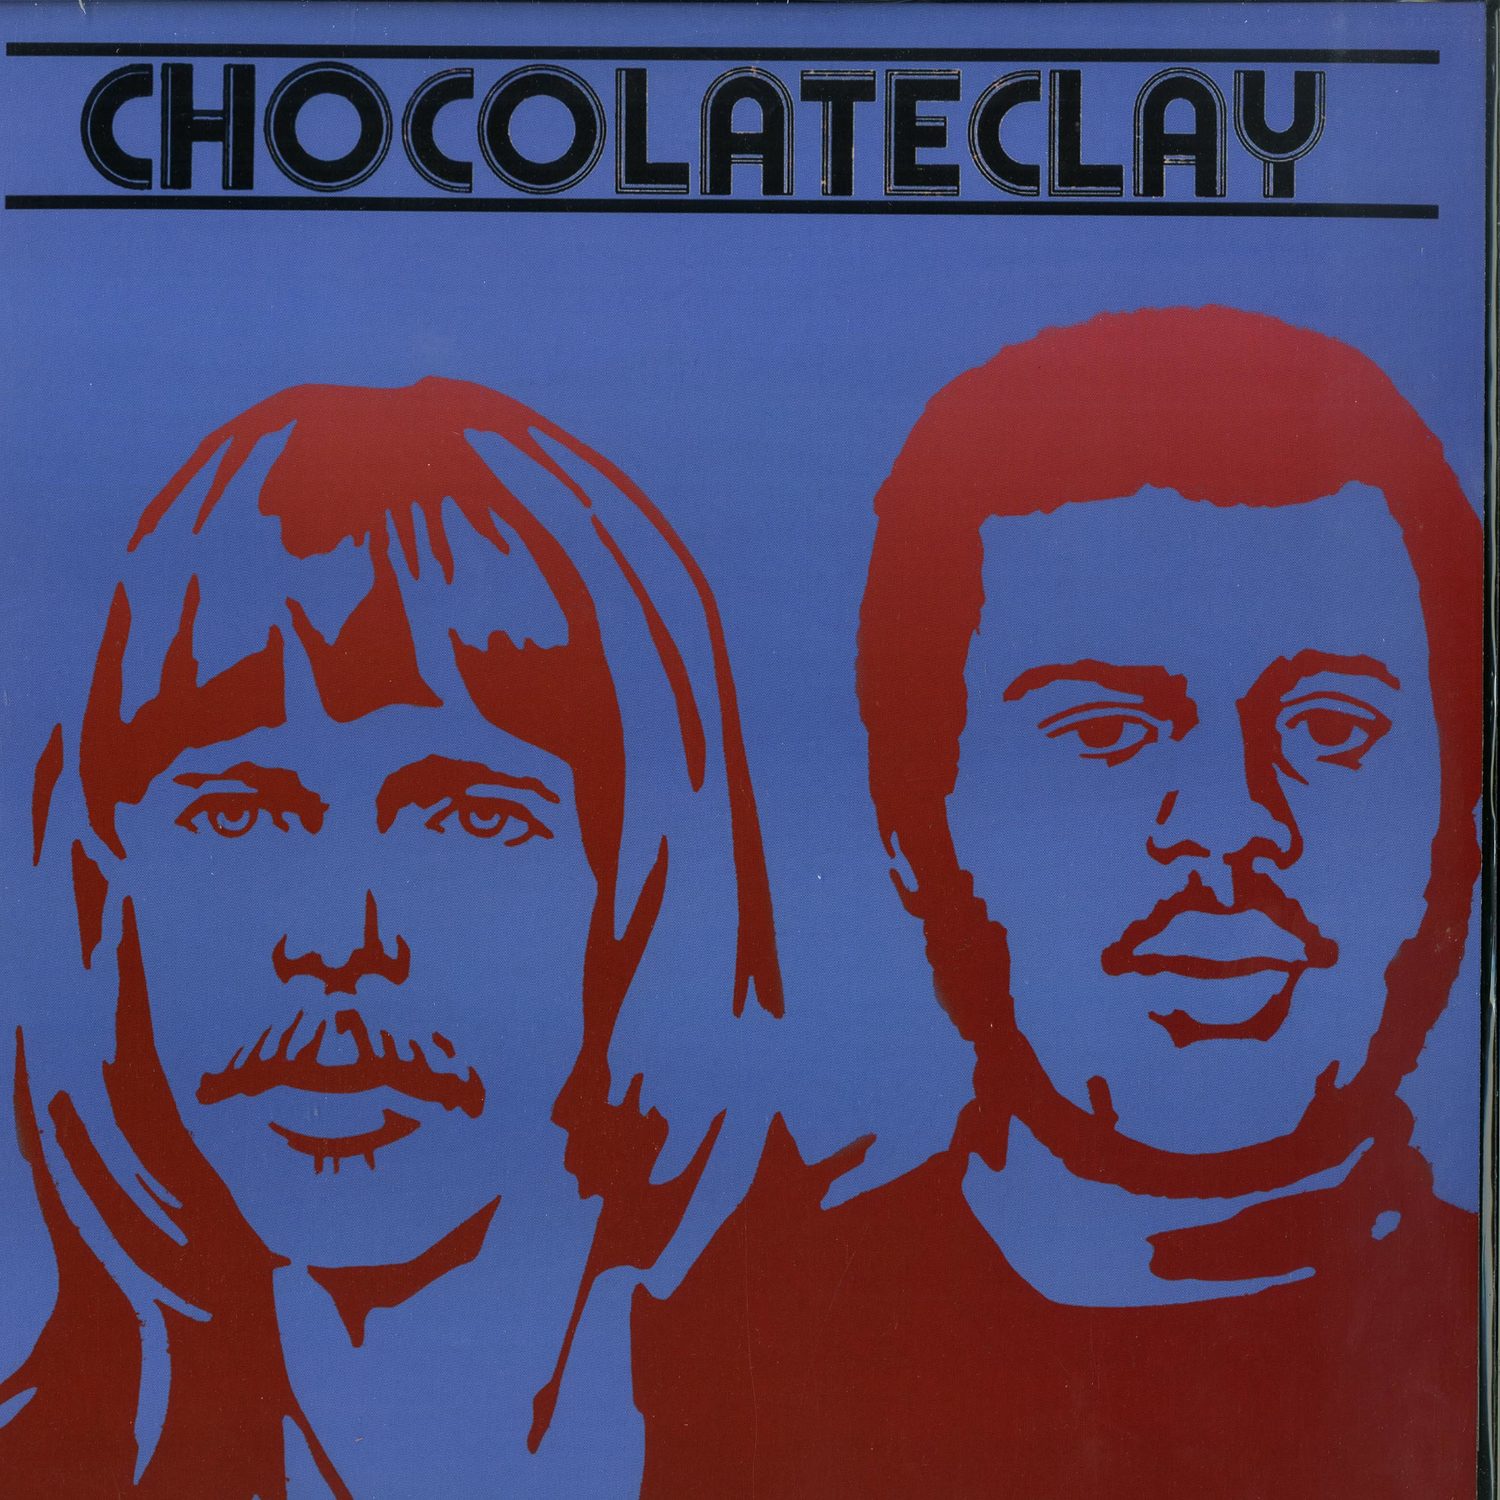 Chocolateclay - CHOCOLATECLAY